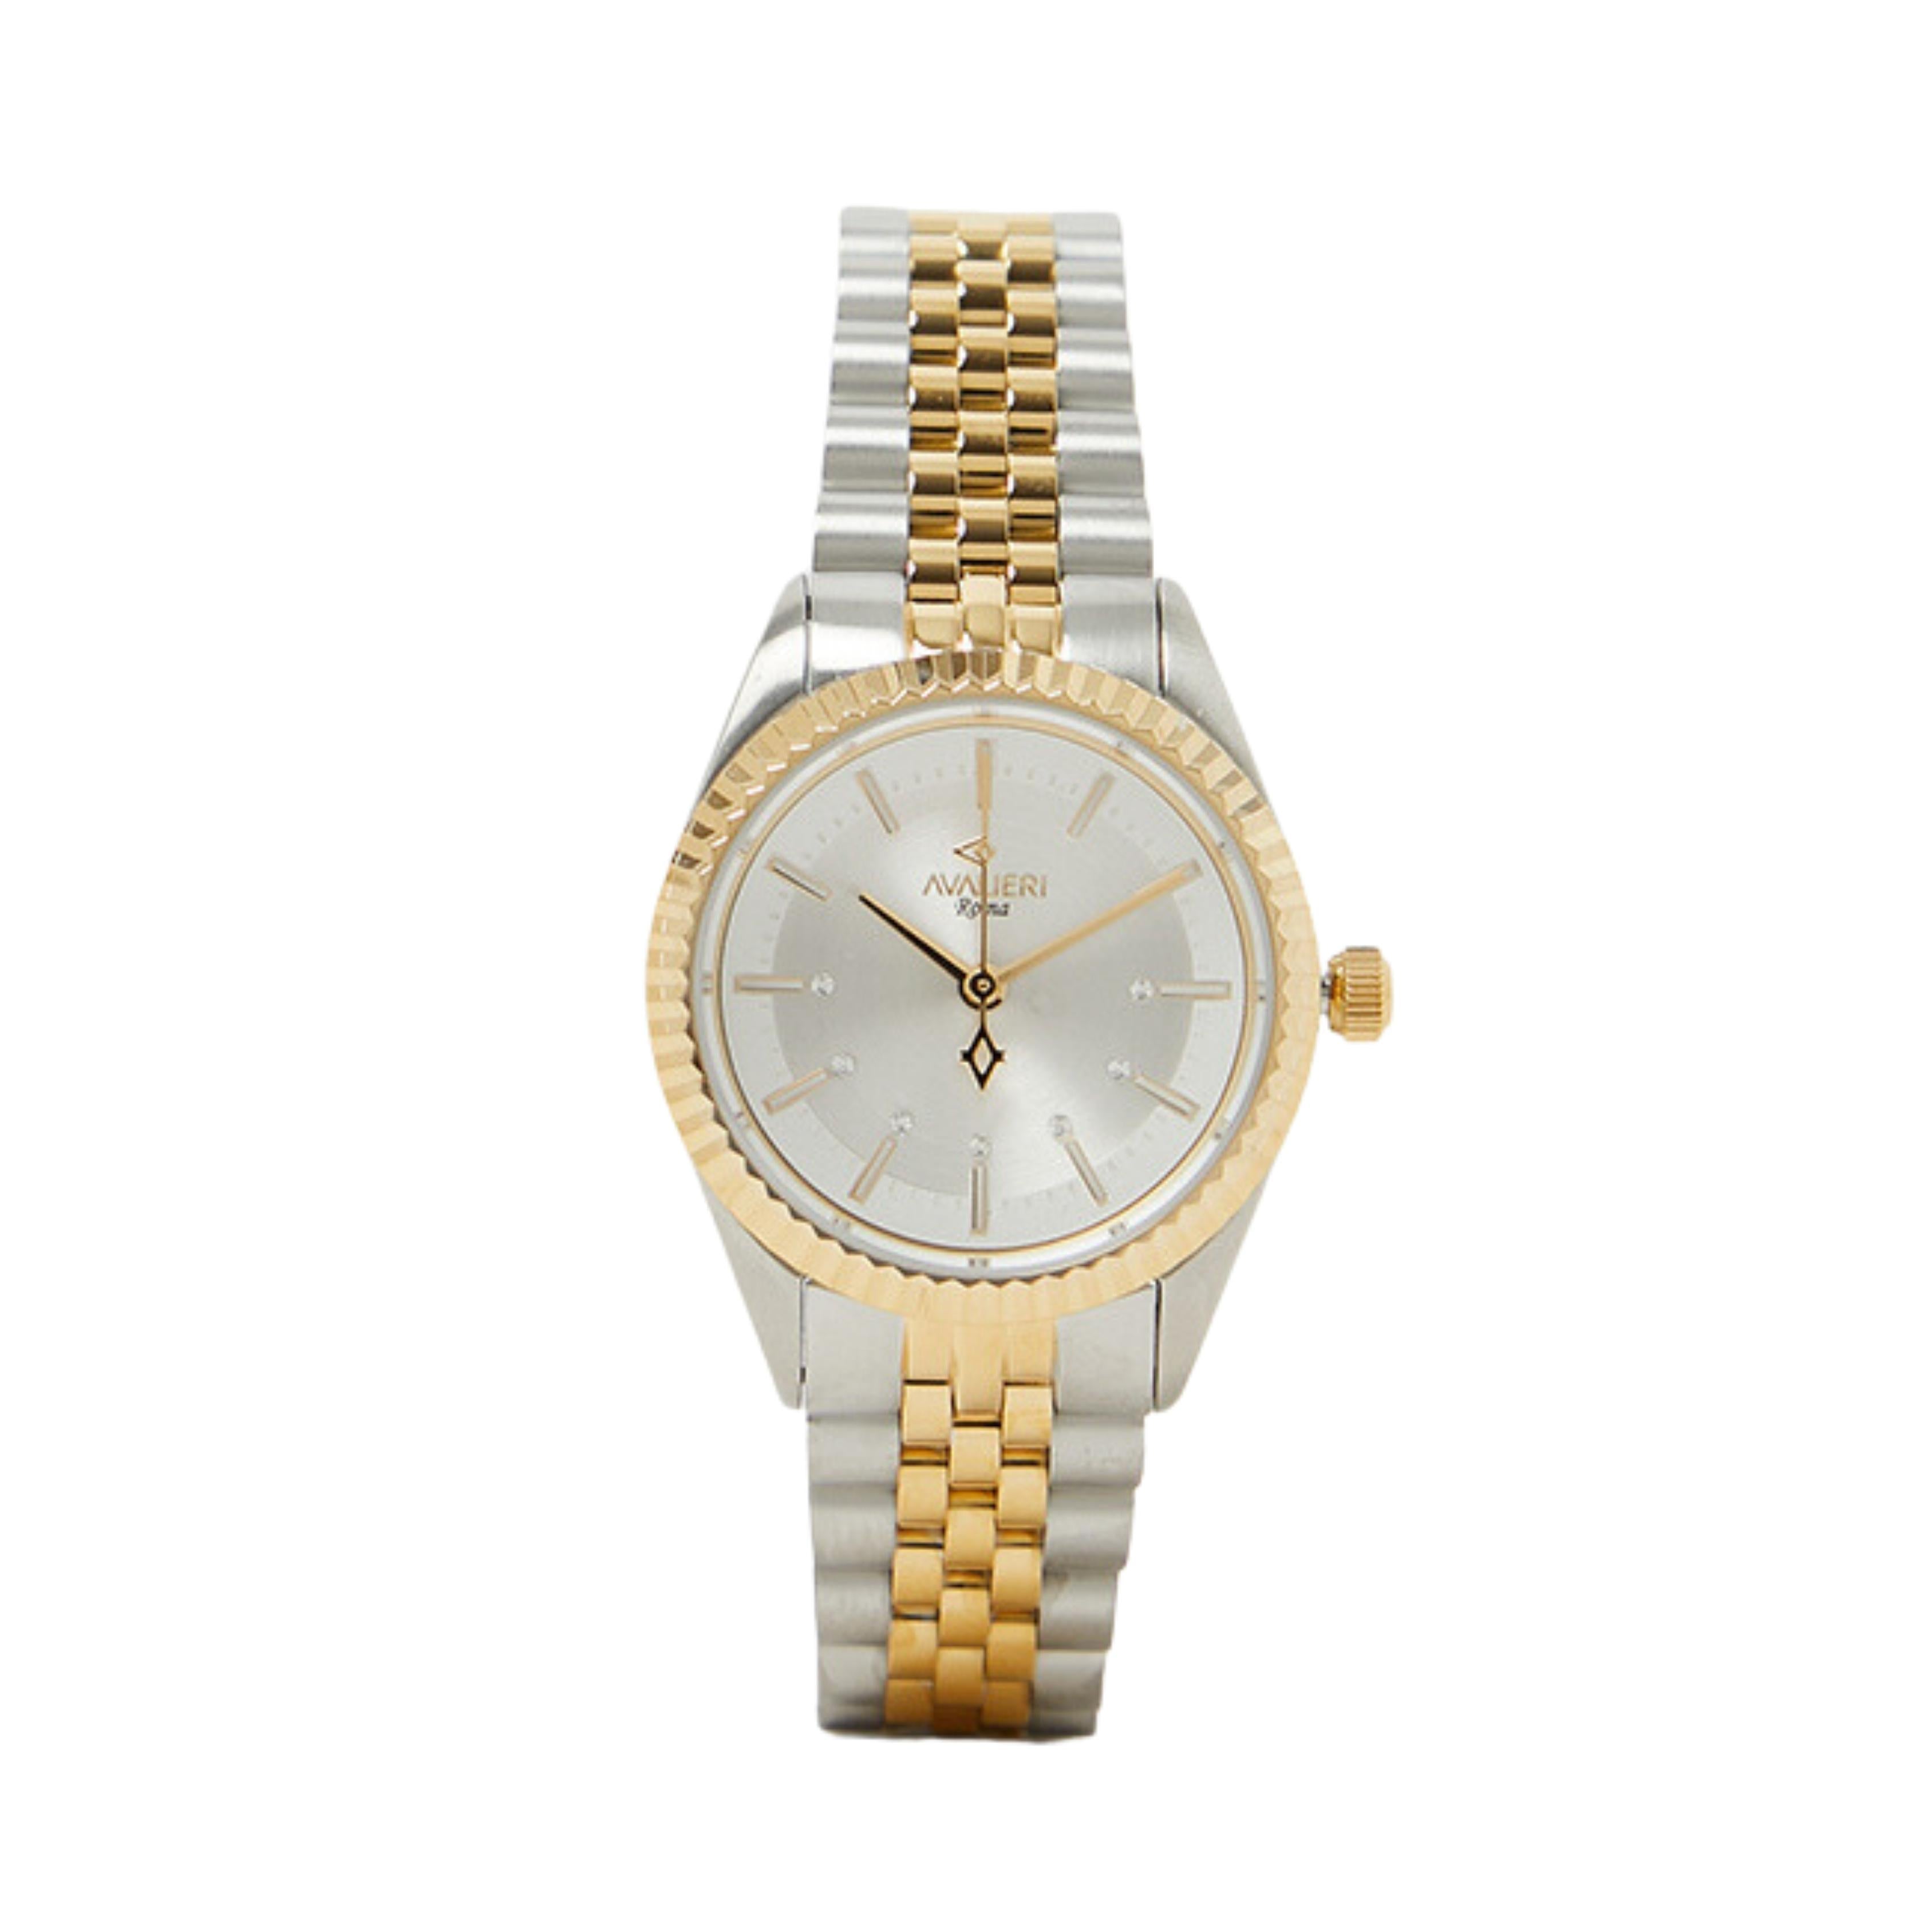 Avalieri Women's Quartz Watch With Silver White Dial - AV-2605B